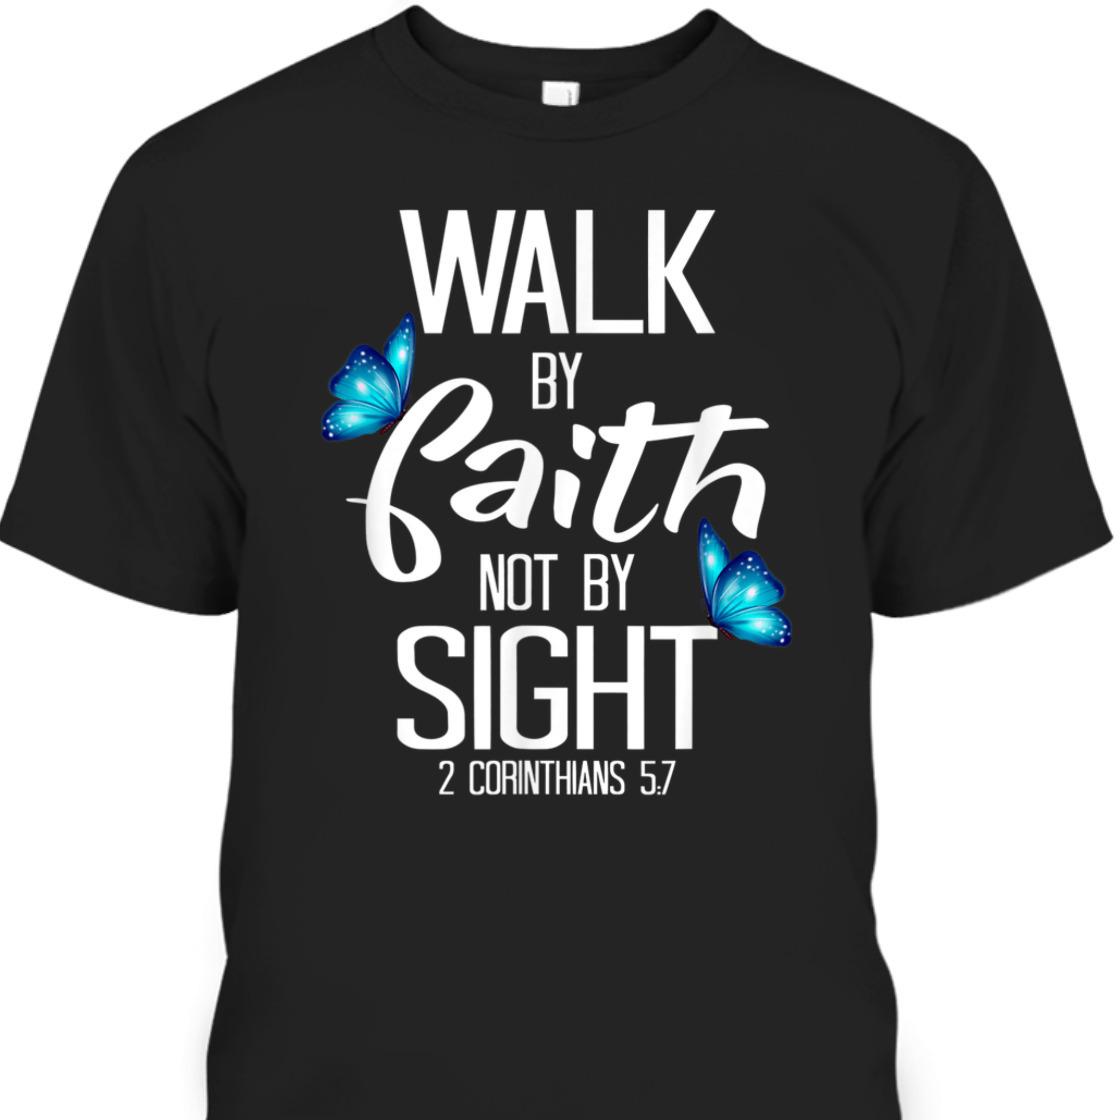 Walk By Faith T-Shirt Not By Sight 2 Corinthians 5:7